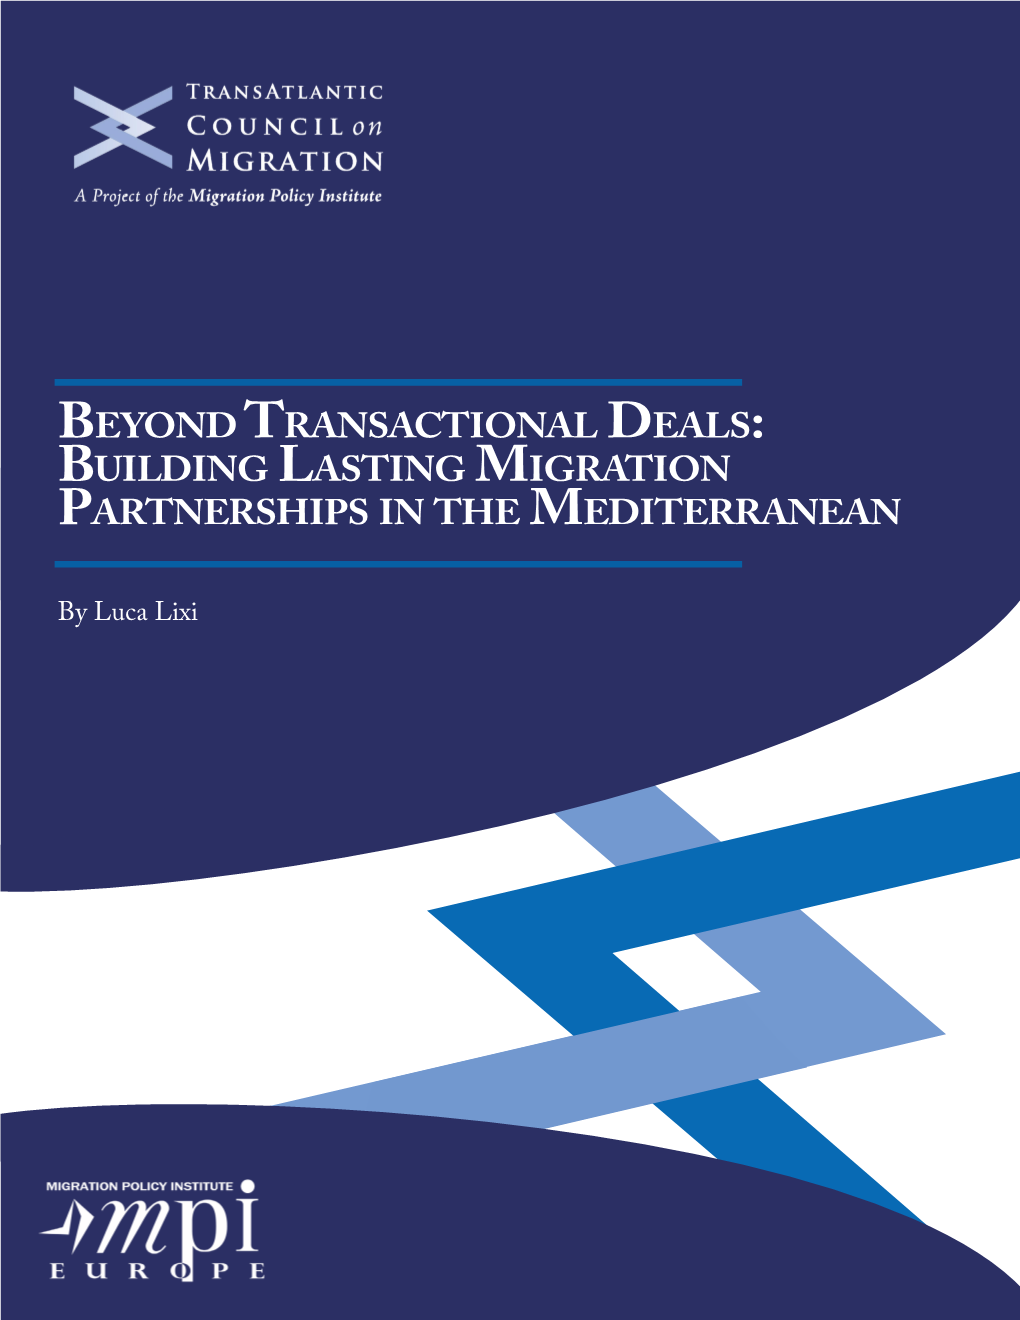 Building Lasting Migration Partnerships in the Mediterranean